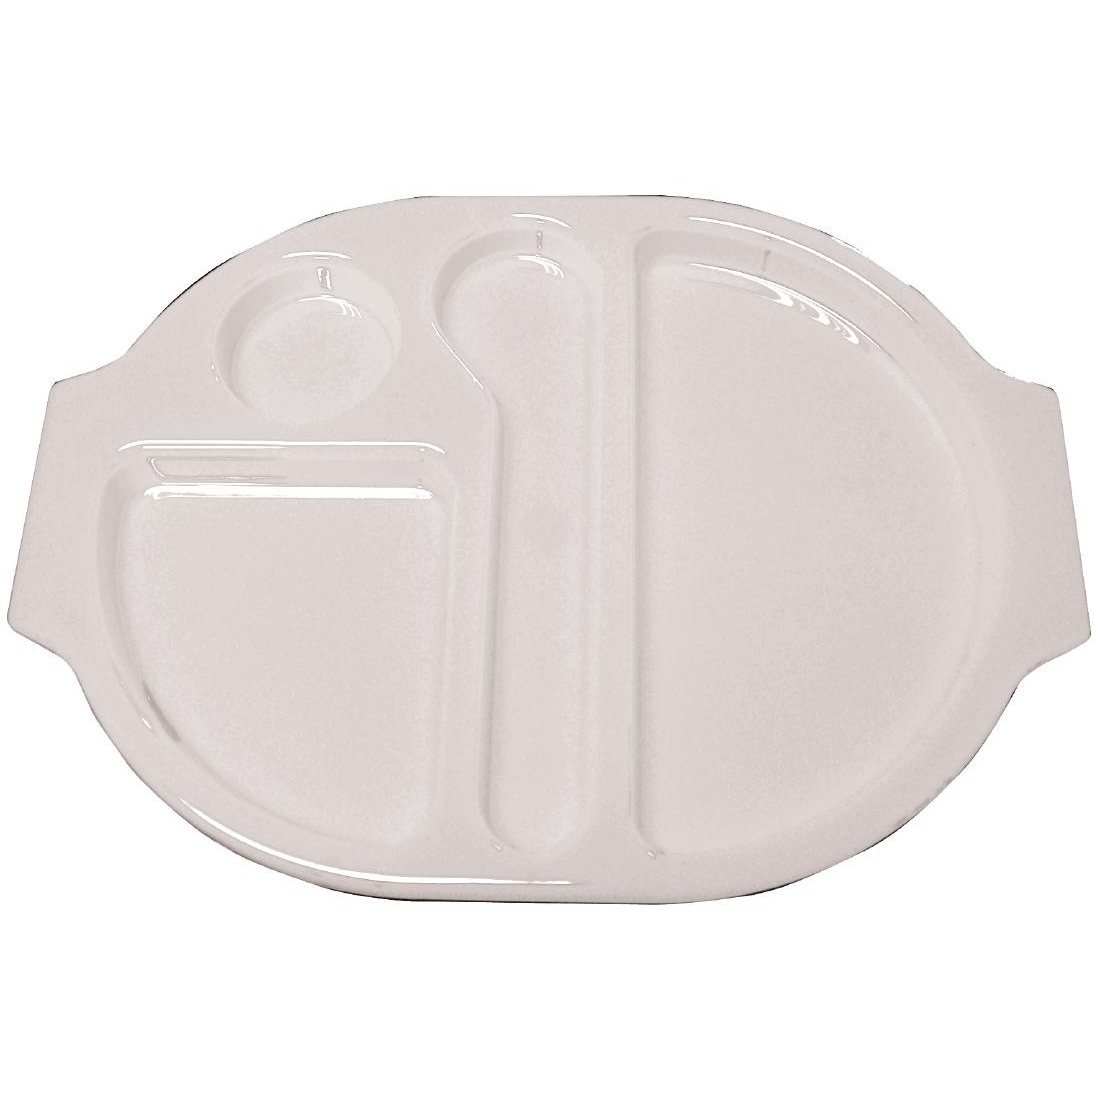 Kristallon Plastic Food Compartment Tray Large White